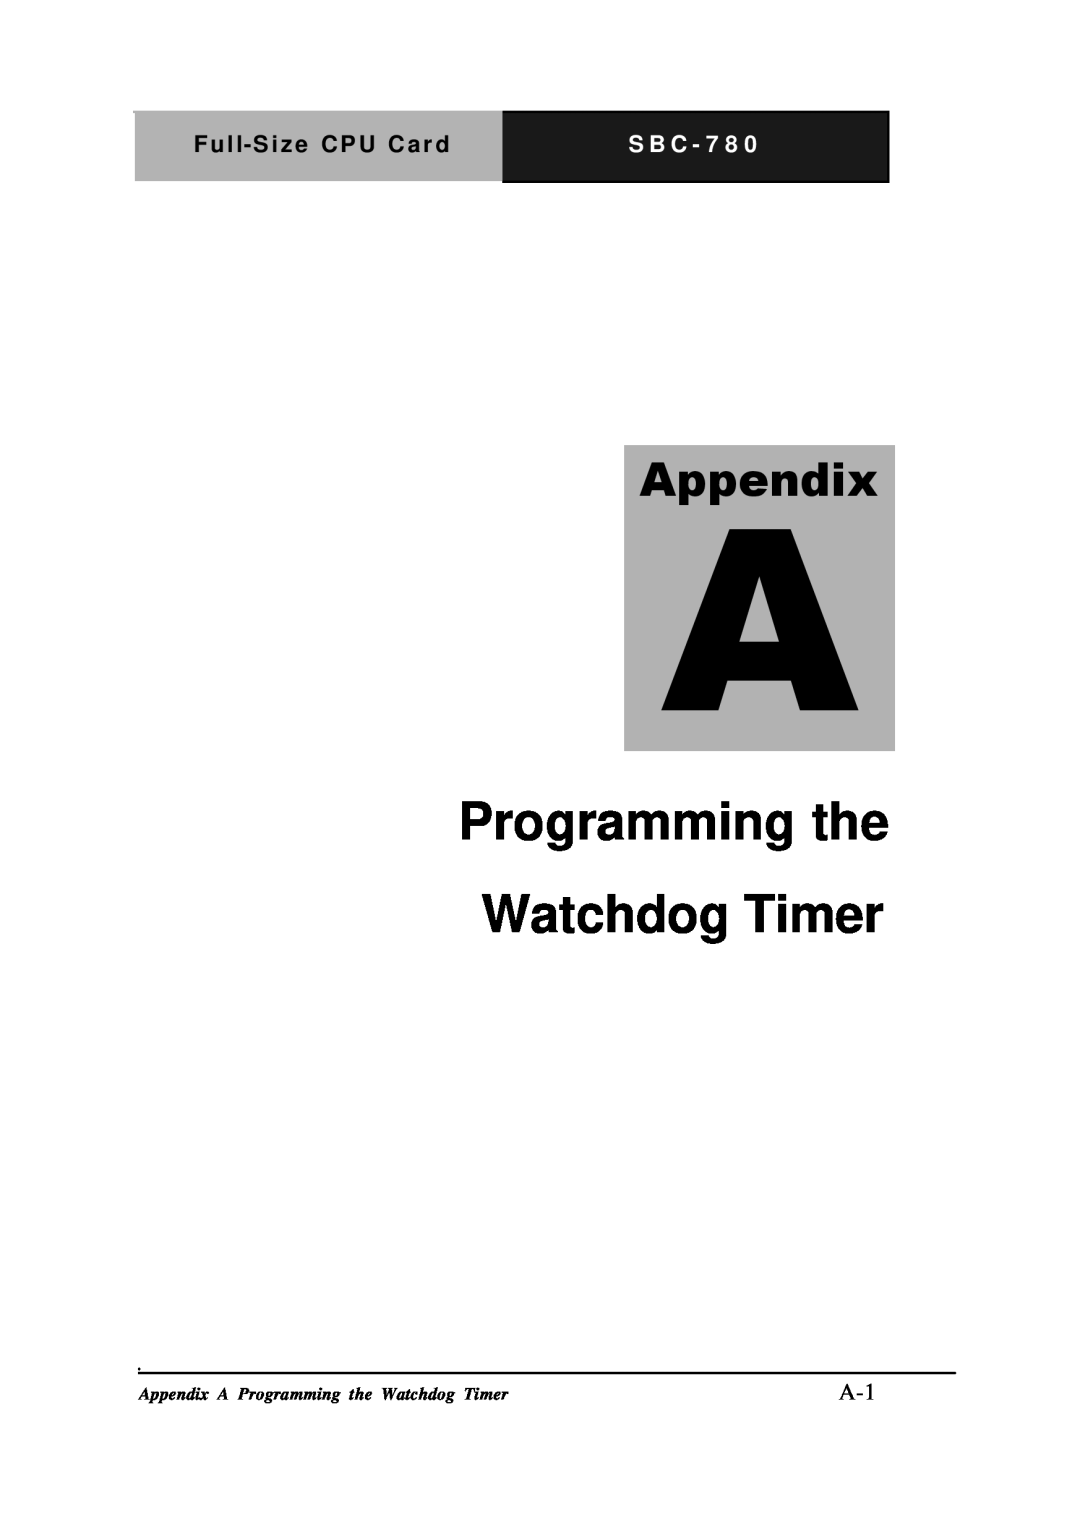 Intel SBC-780 manual S B C - 7, Appendix A Programming the Watchdog Timer 